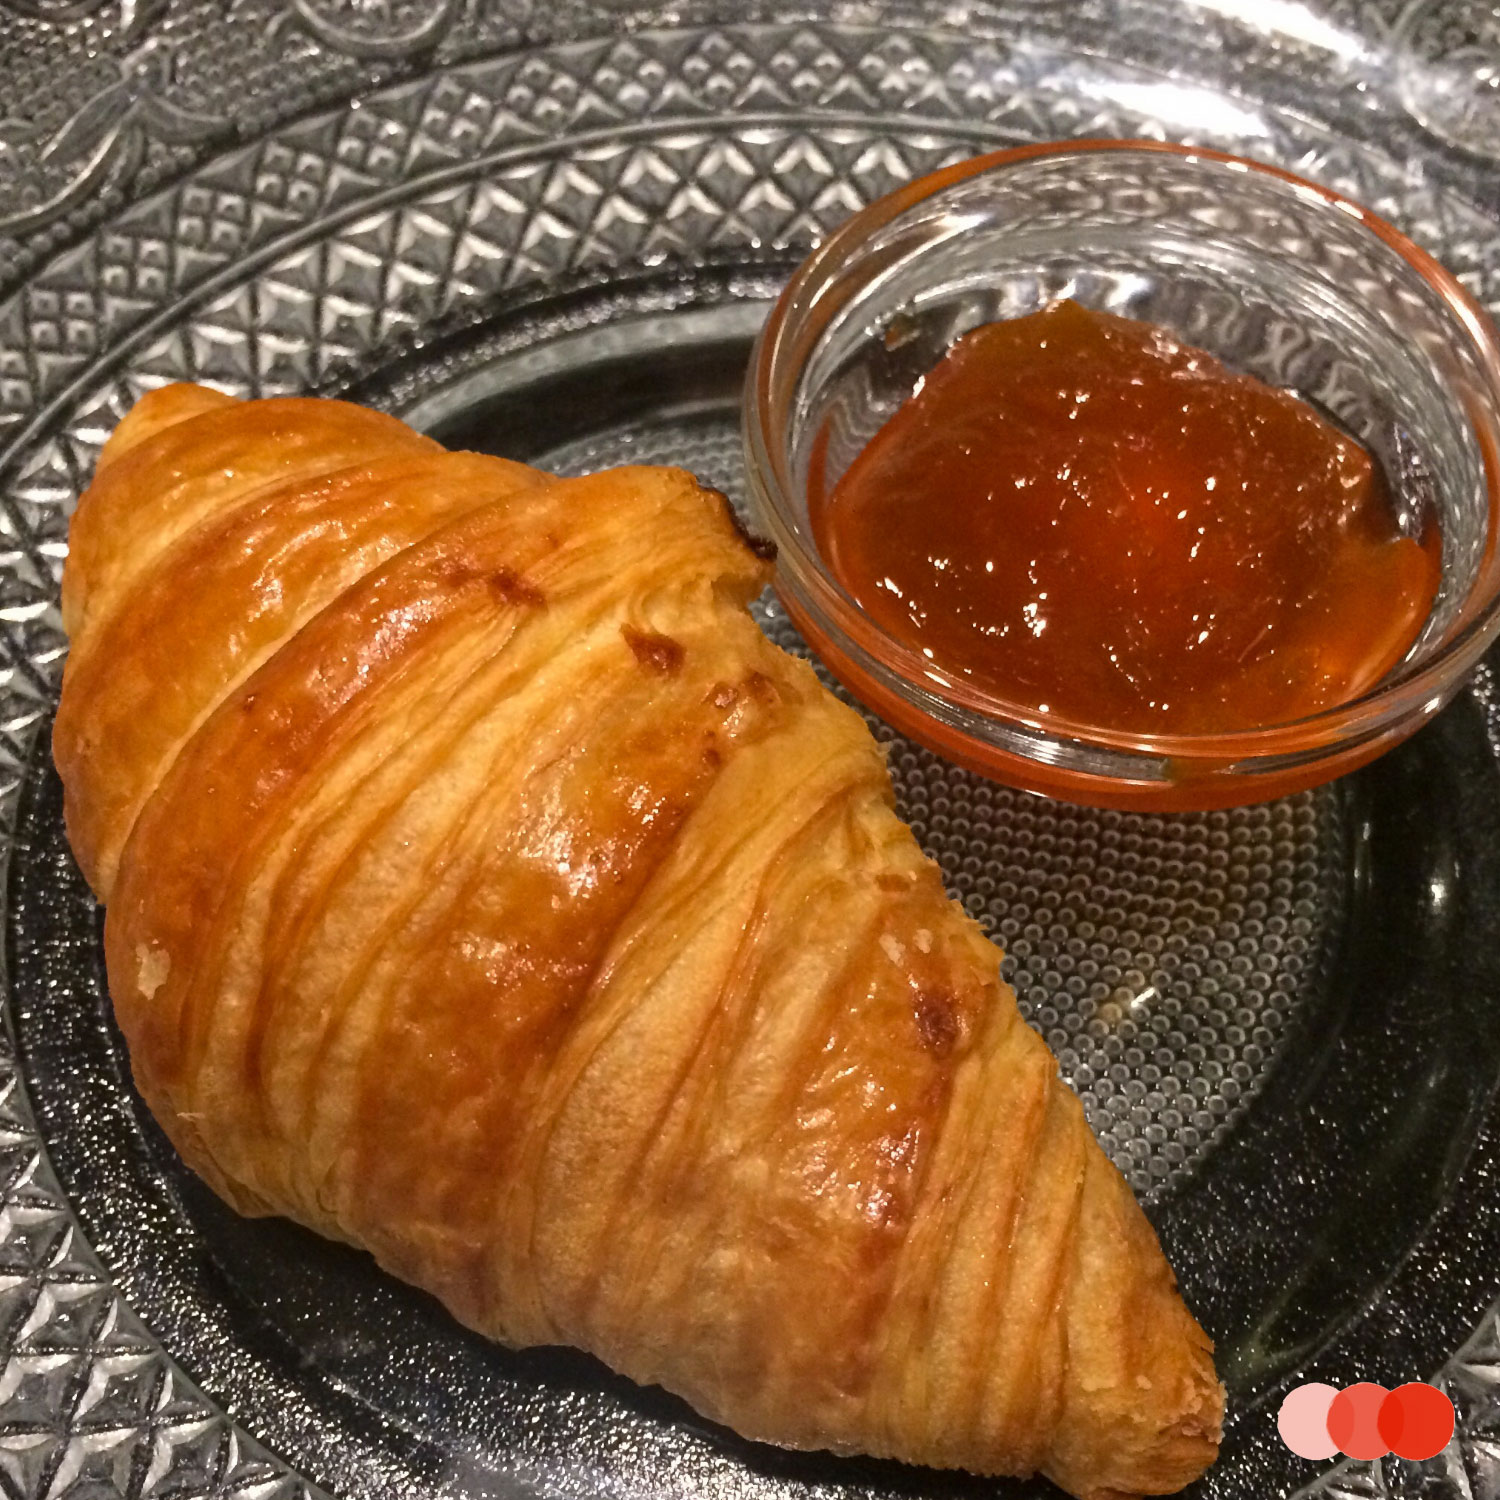 Frühstück in Paris